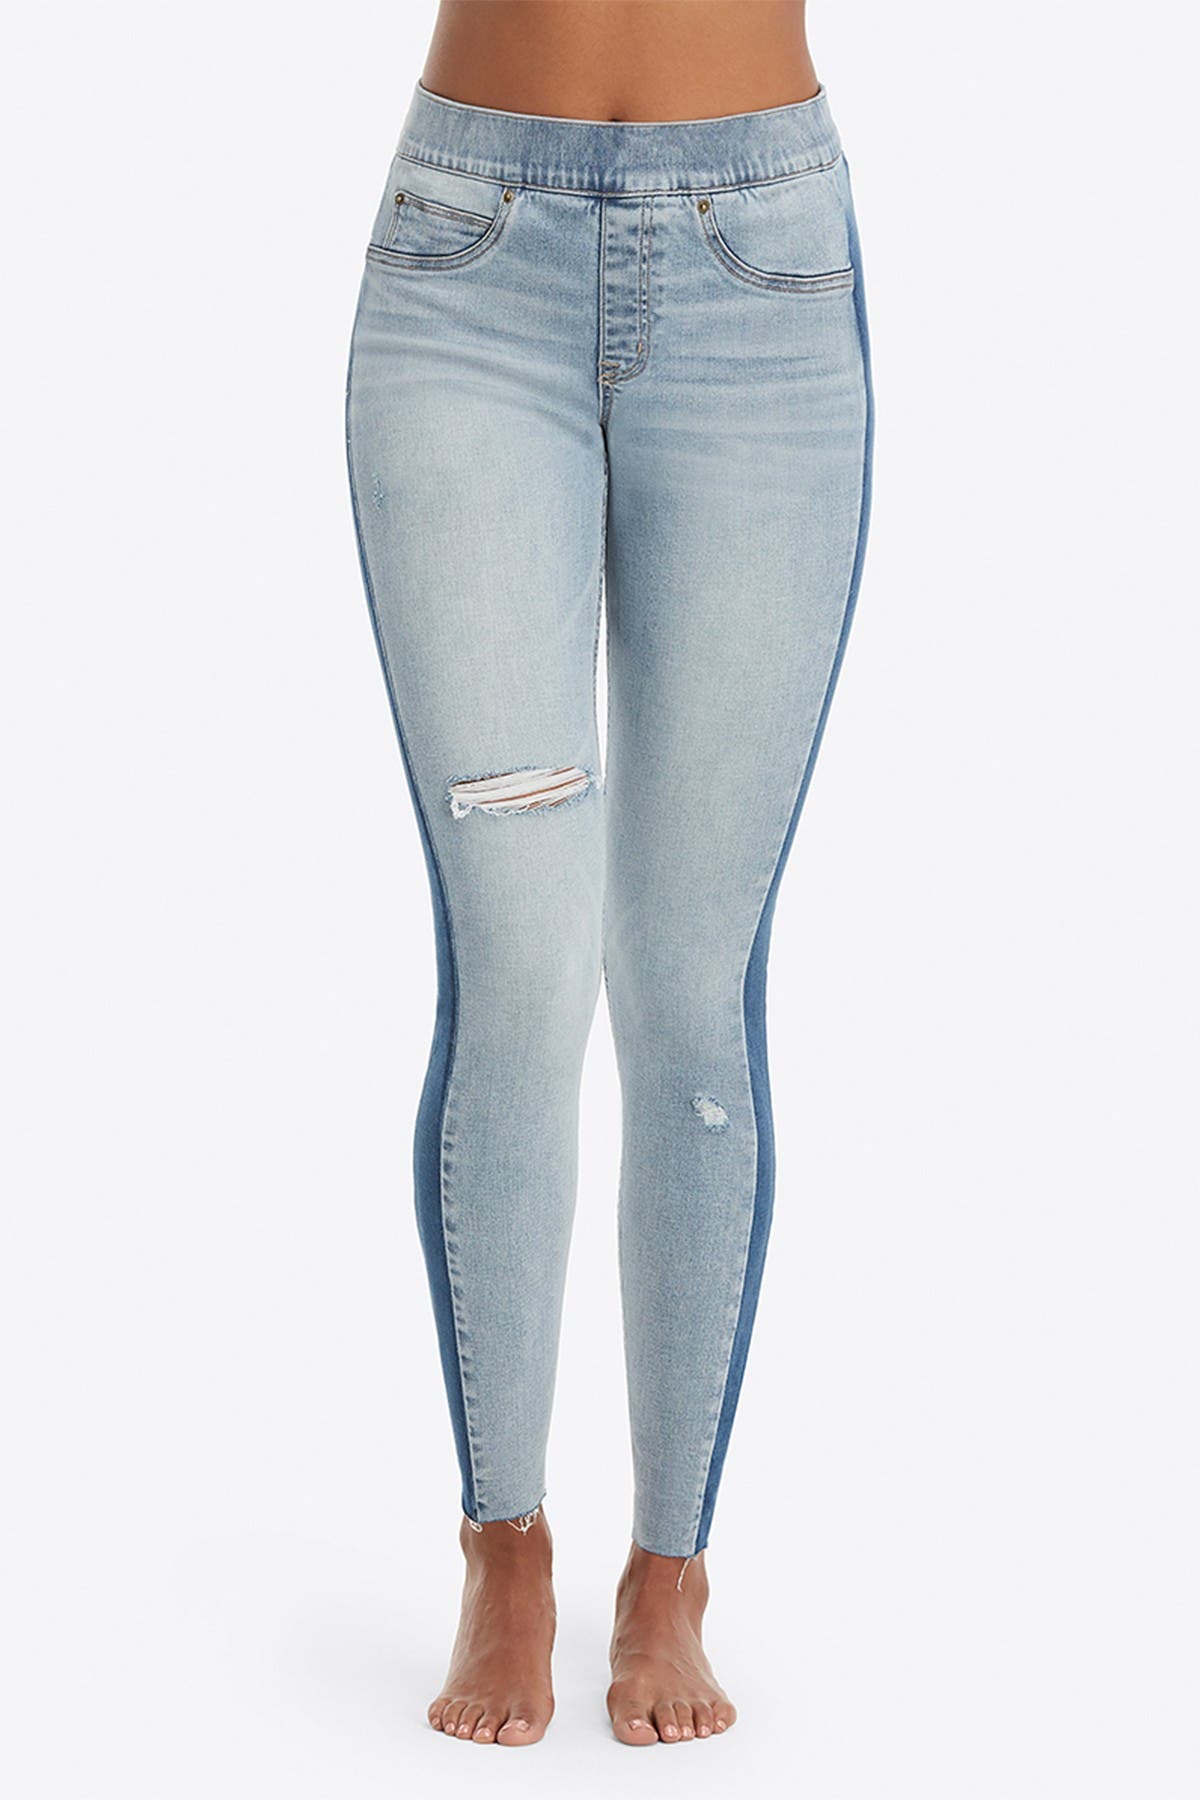 spanx jeans plus size